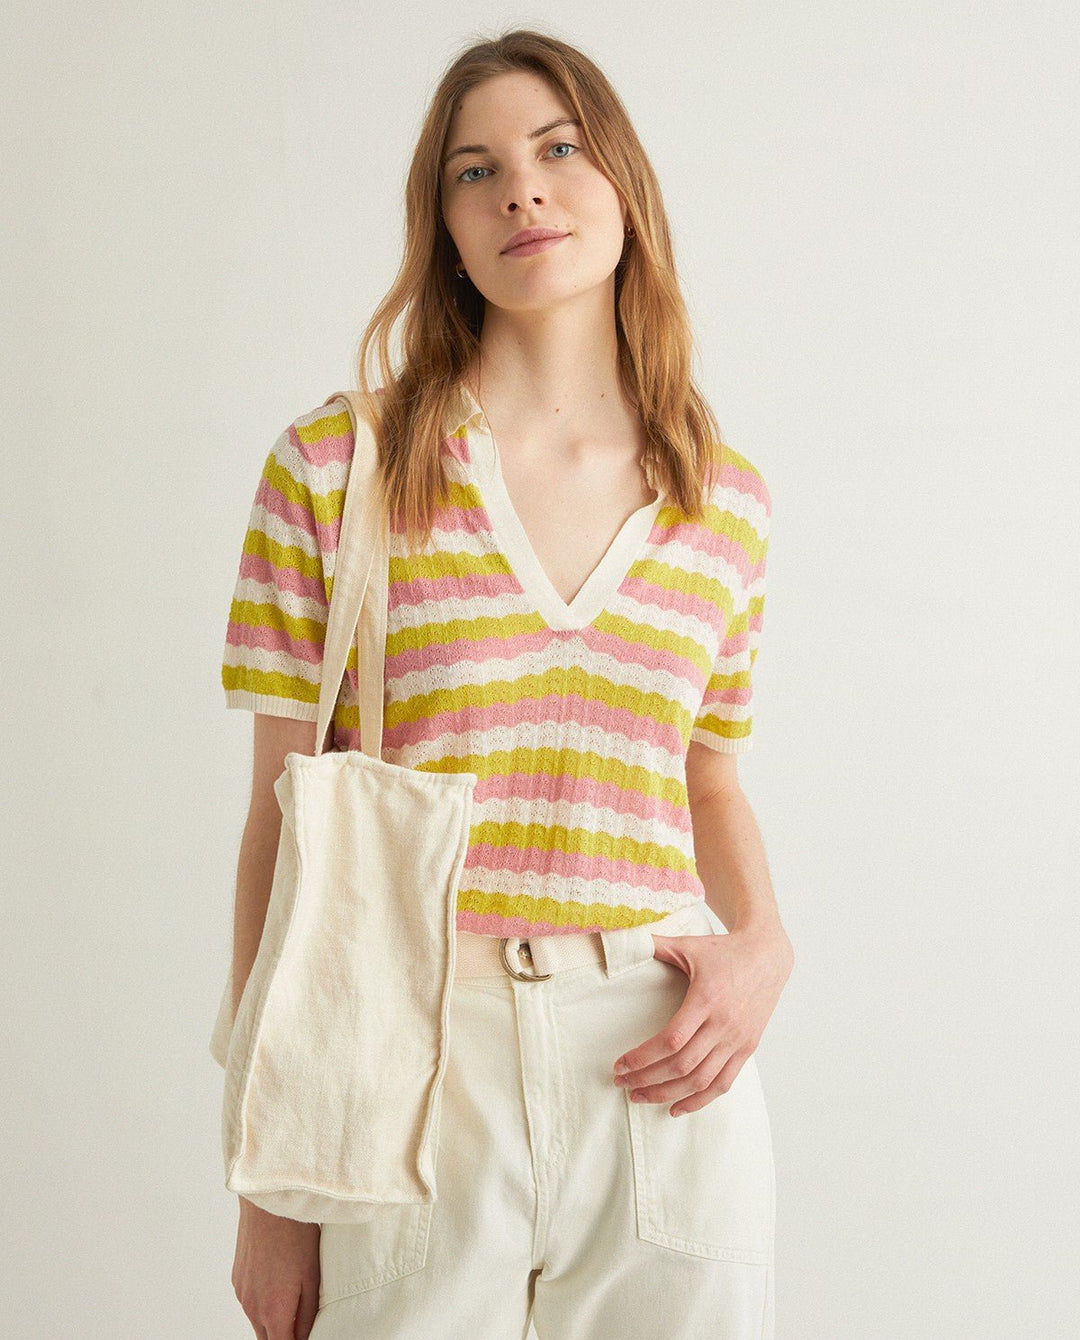 Yerse - S/S Knit Striped VNeck Polo: Multi - Shorely Chic Boutique